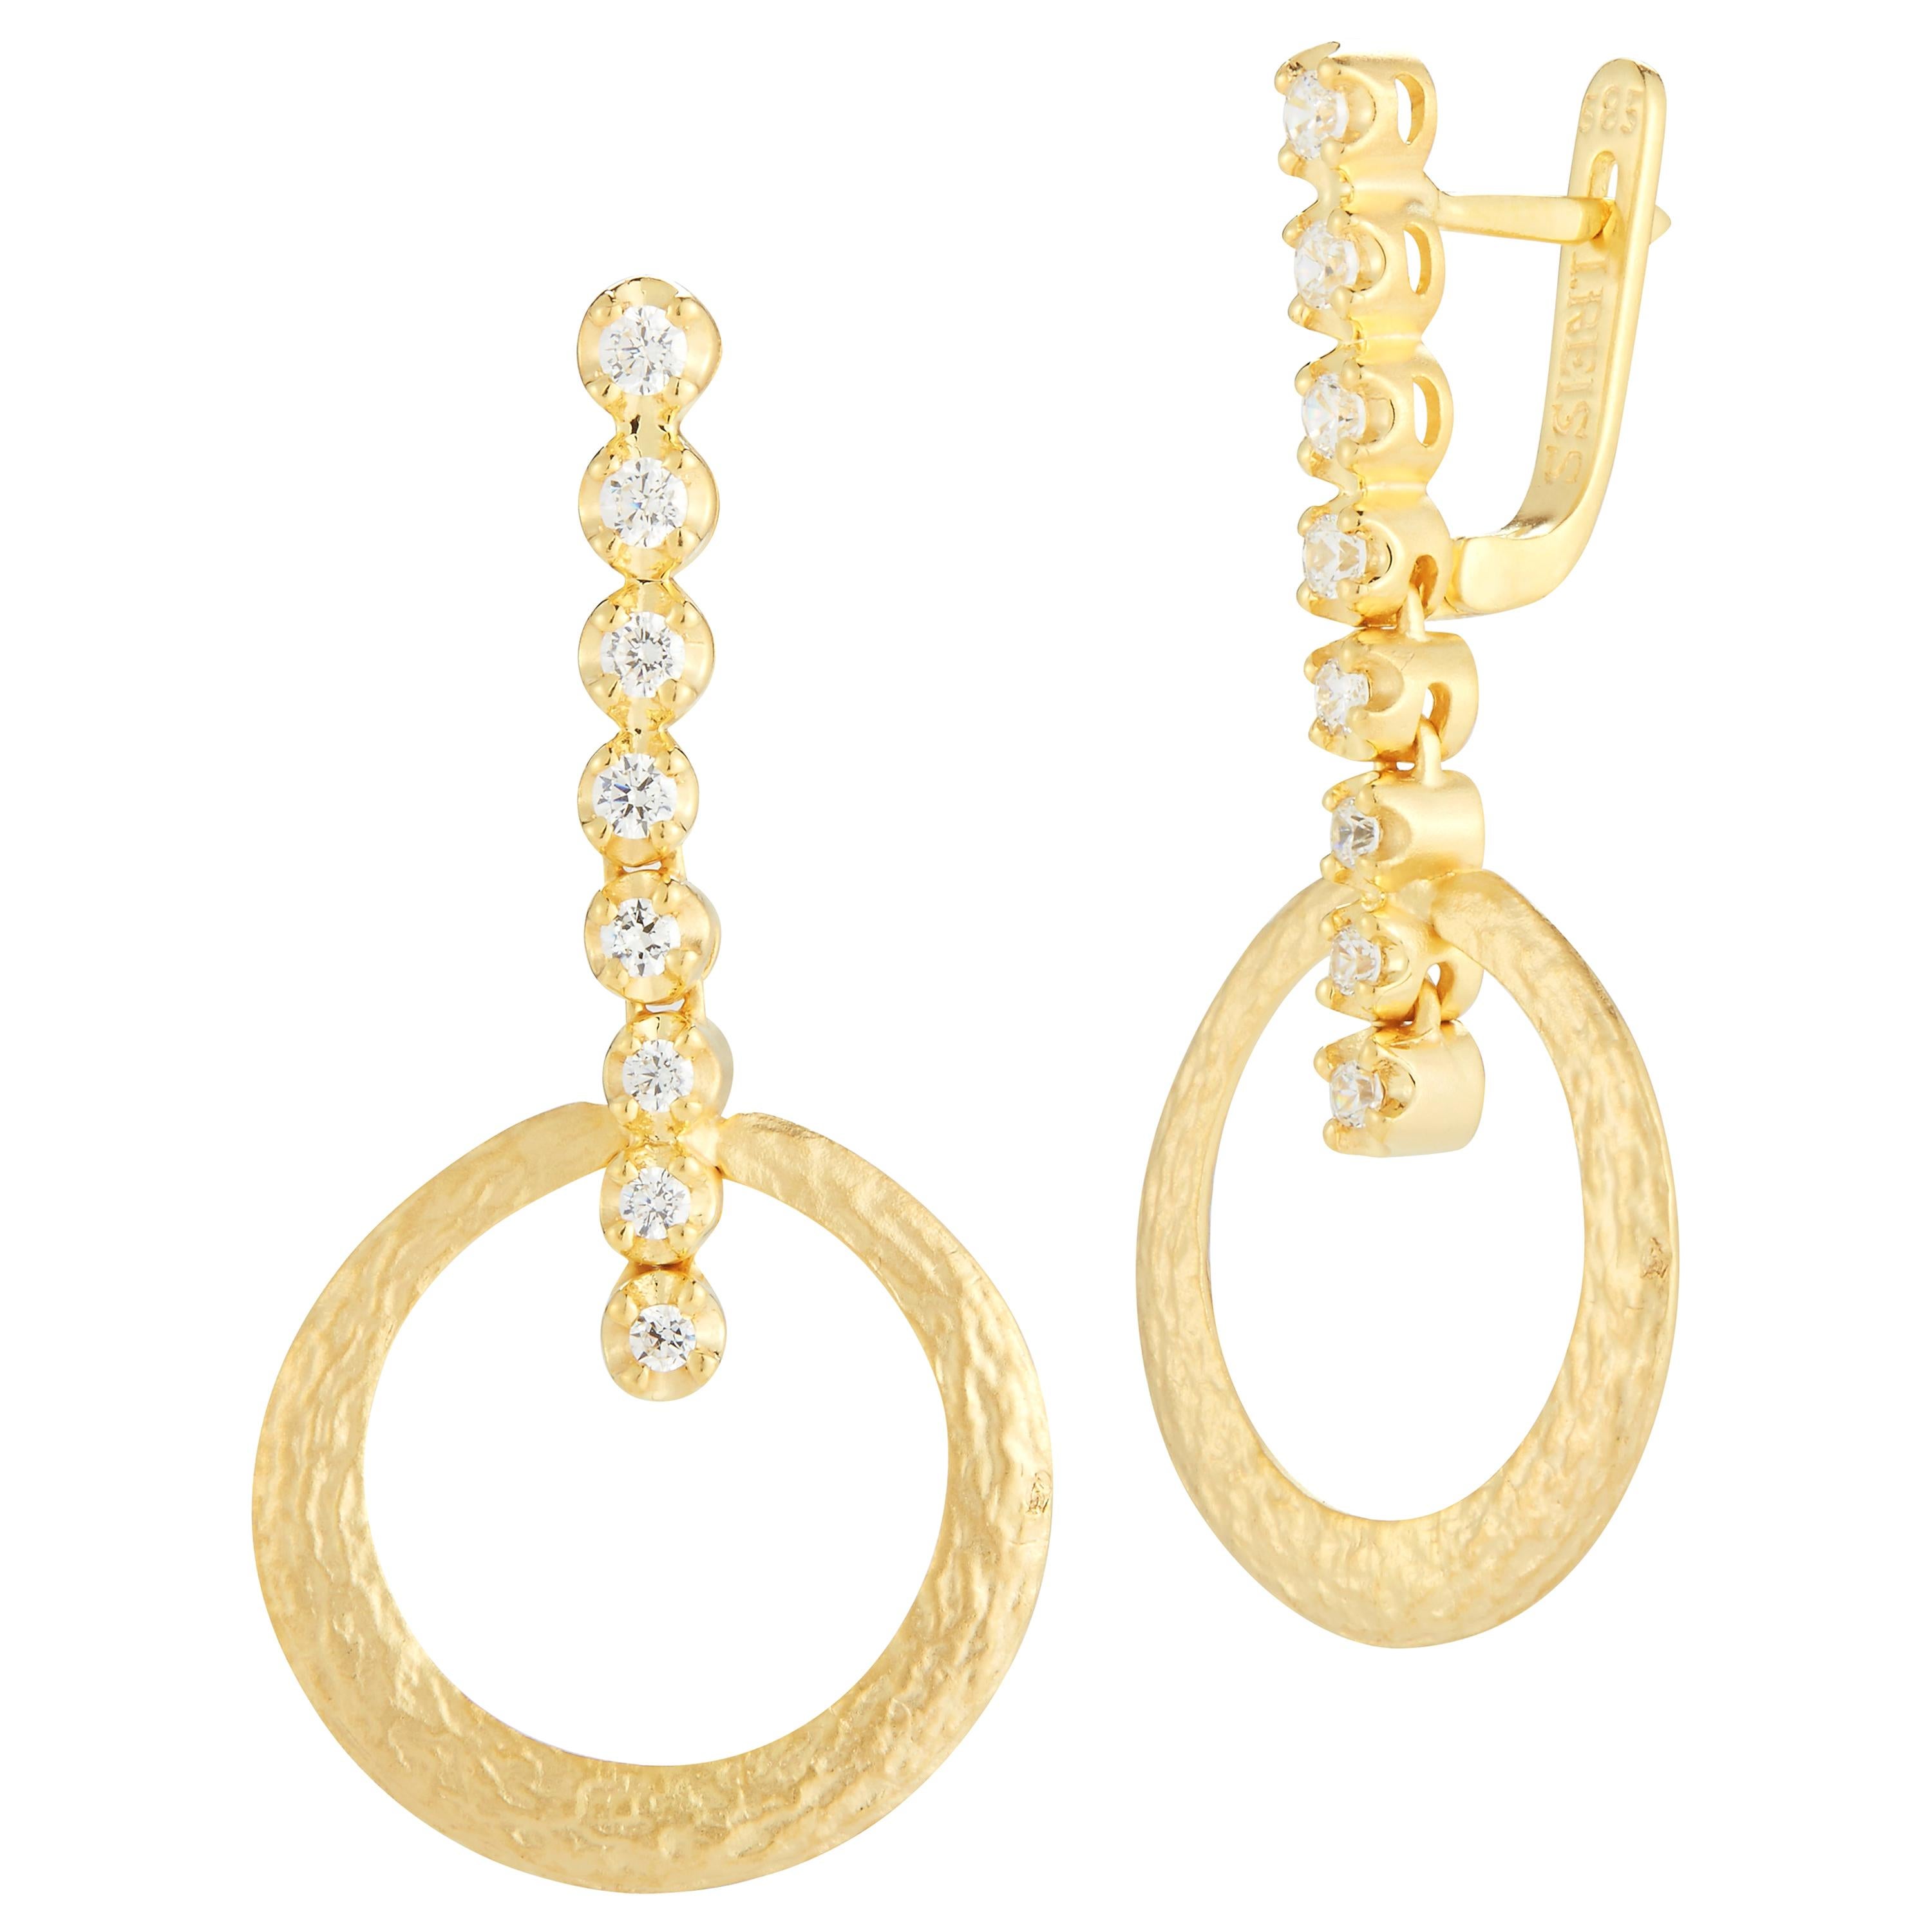 Handcrafted 14 Karat Yellow Gold Dangling Open Circle Earrings